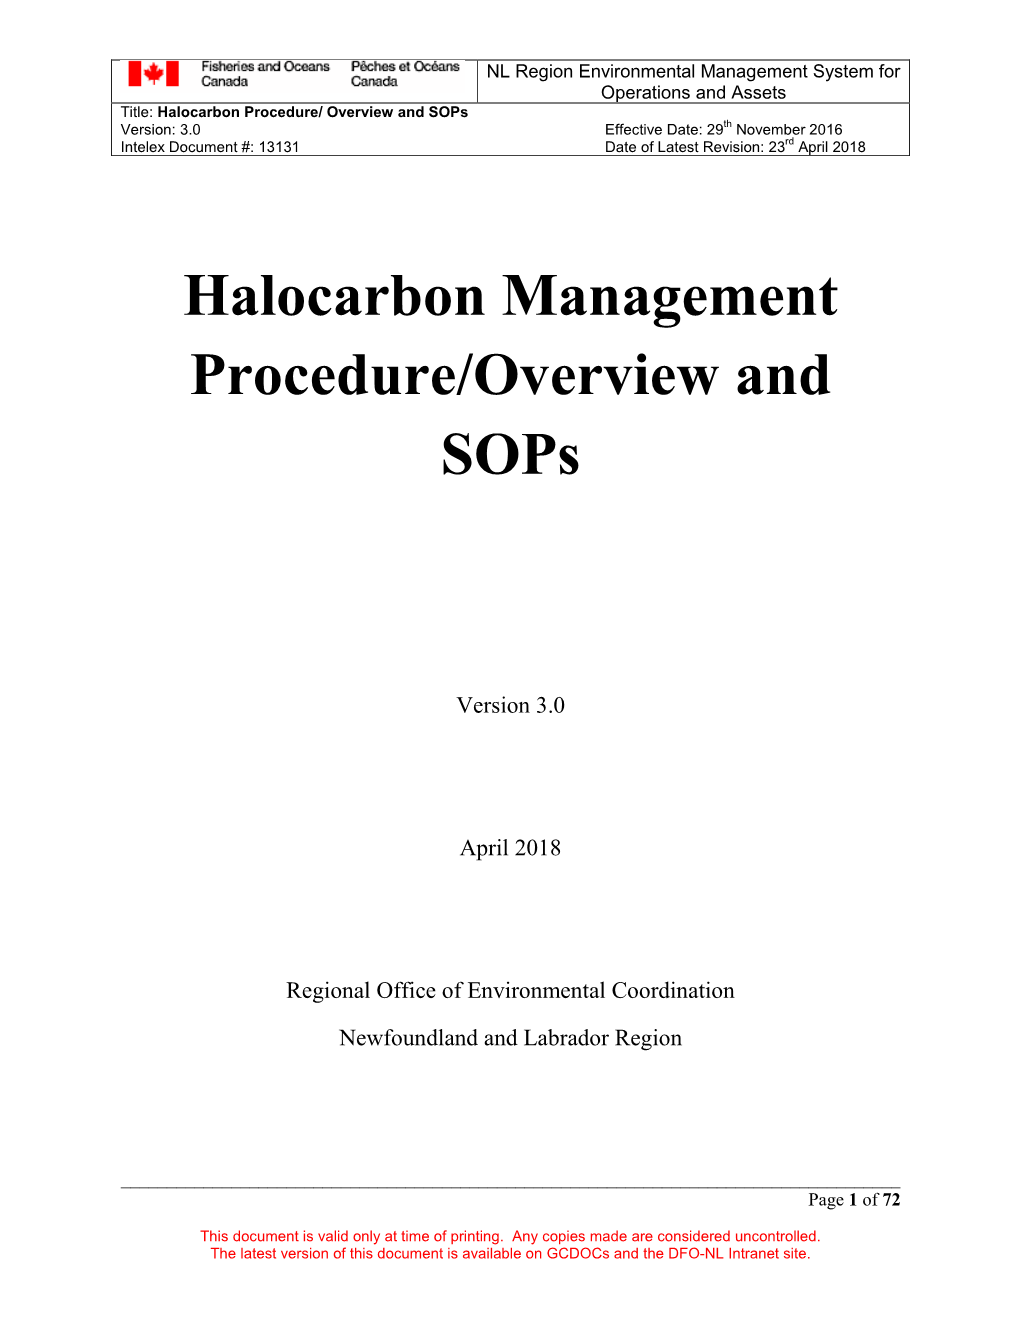 Halocarbon Management Procedure/Overview and Sops